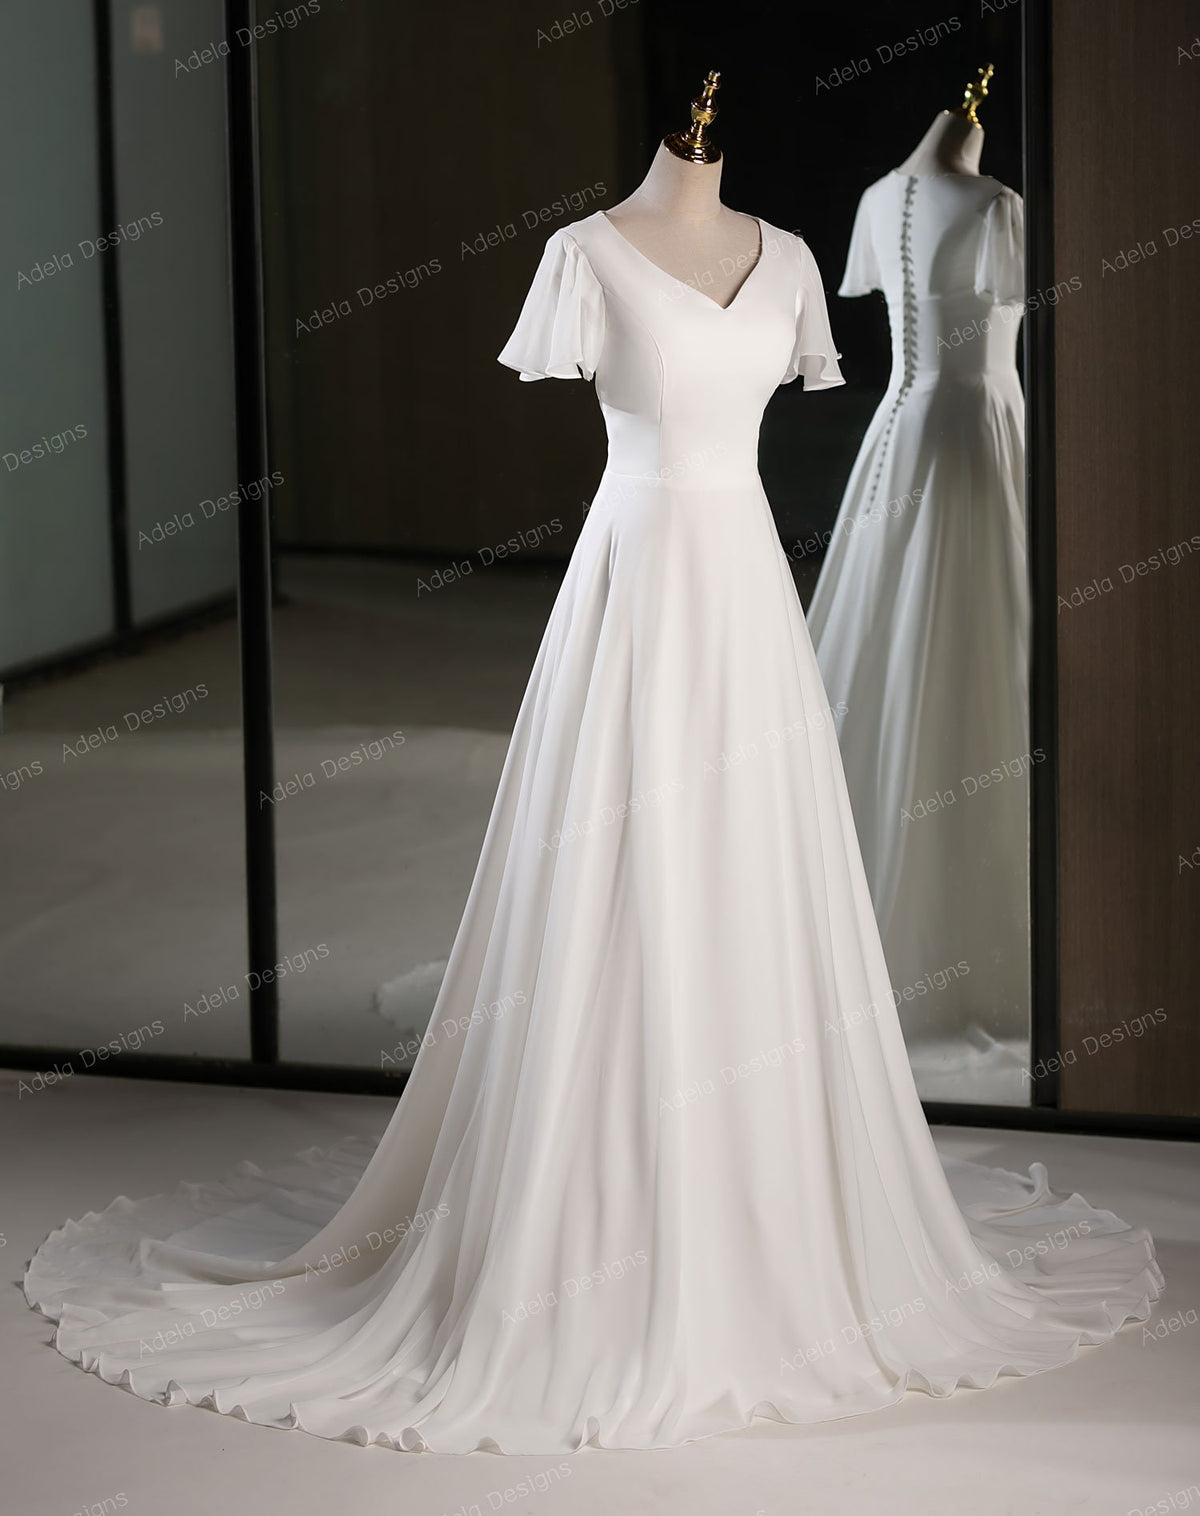 Modest Chiffon Short Flutter Sleeve Bridal Ball Gown Wedding Dress Boho Aline Silhouette V Neckline Covered Back LDS With Train